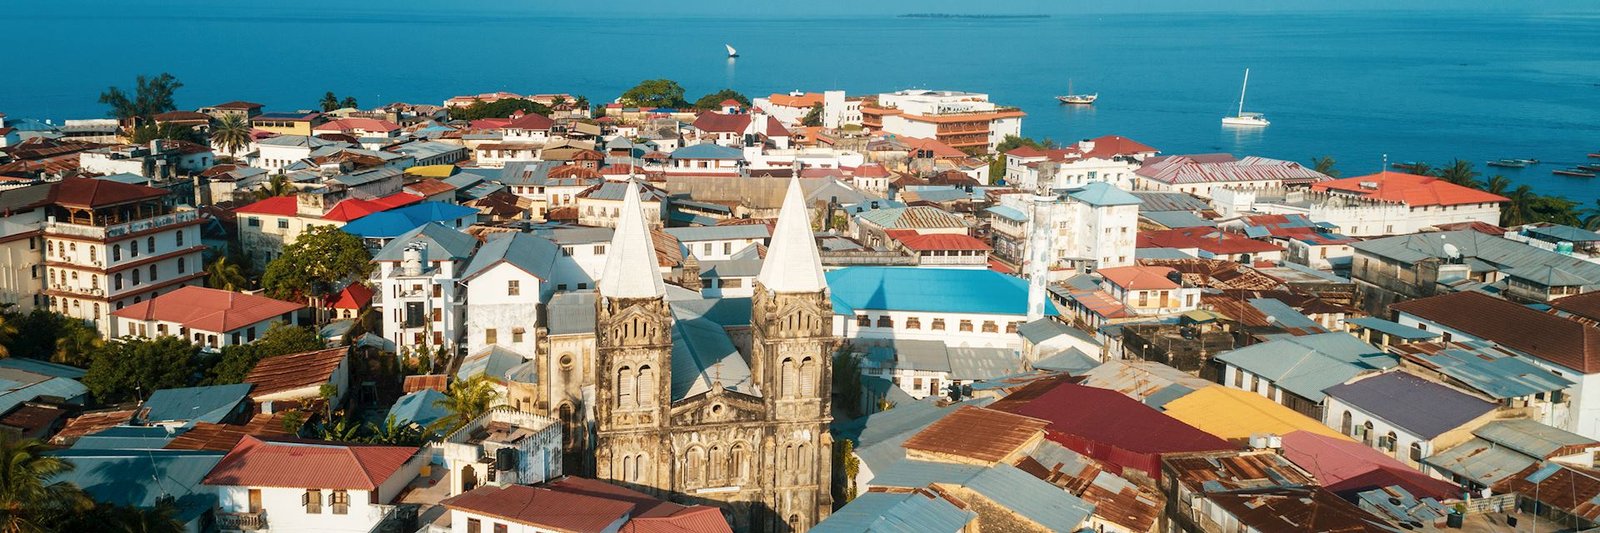 The ultimate travel guide for Stone town Zanzibar